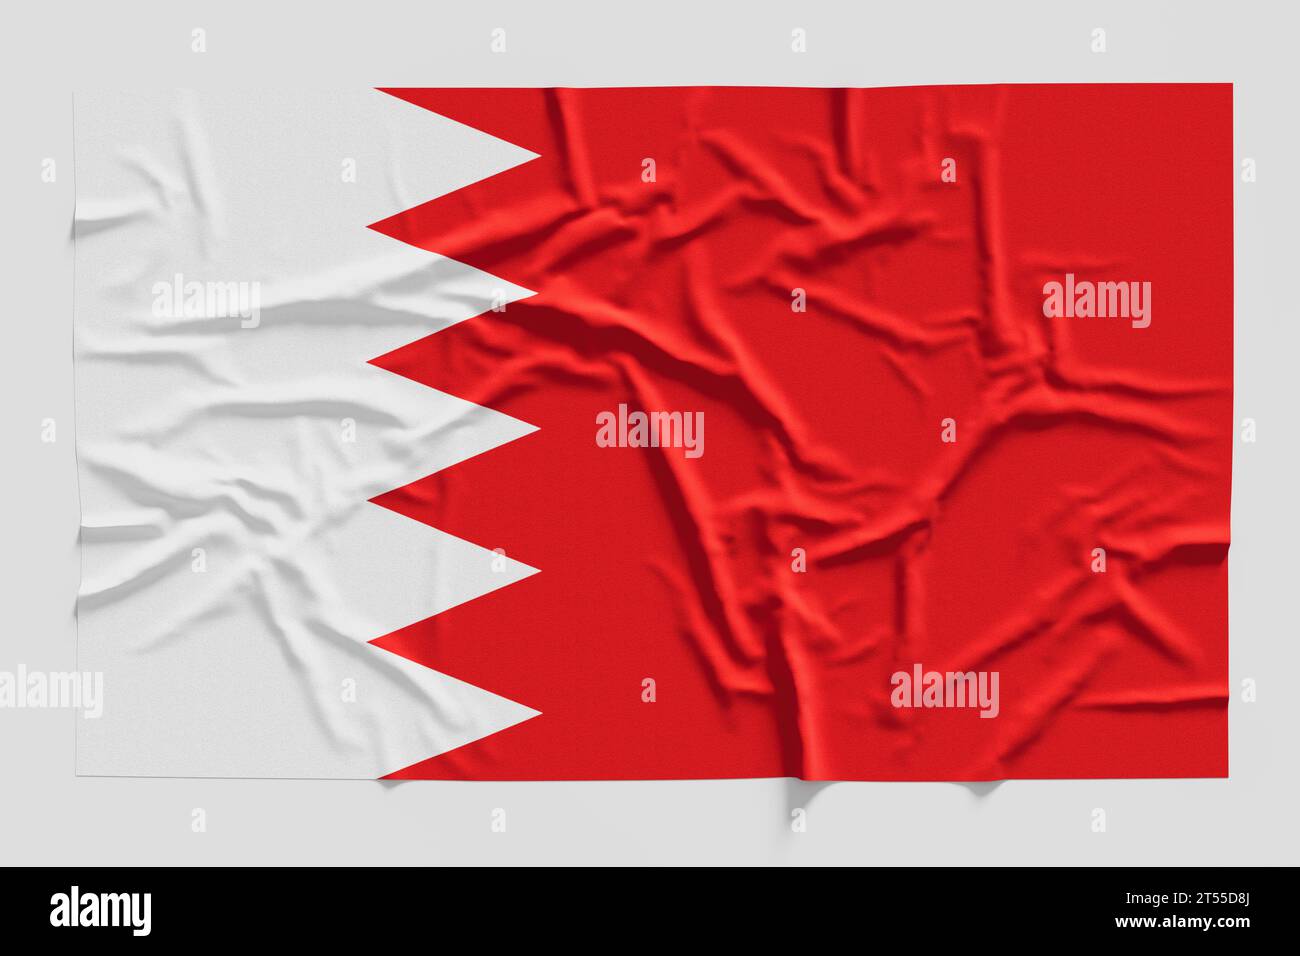 Flag of Bahrain. Fabric textured Bahrain flag isolated on white background. 3D illustration Stock Photo